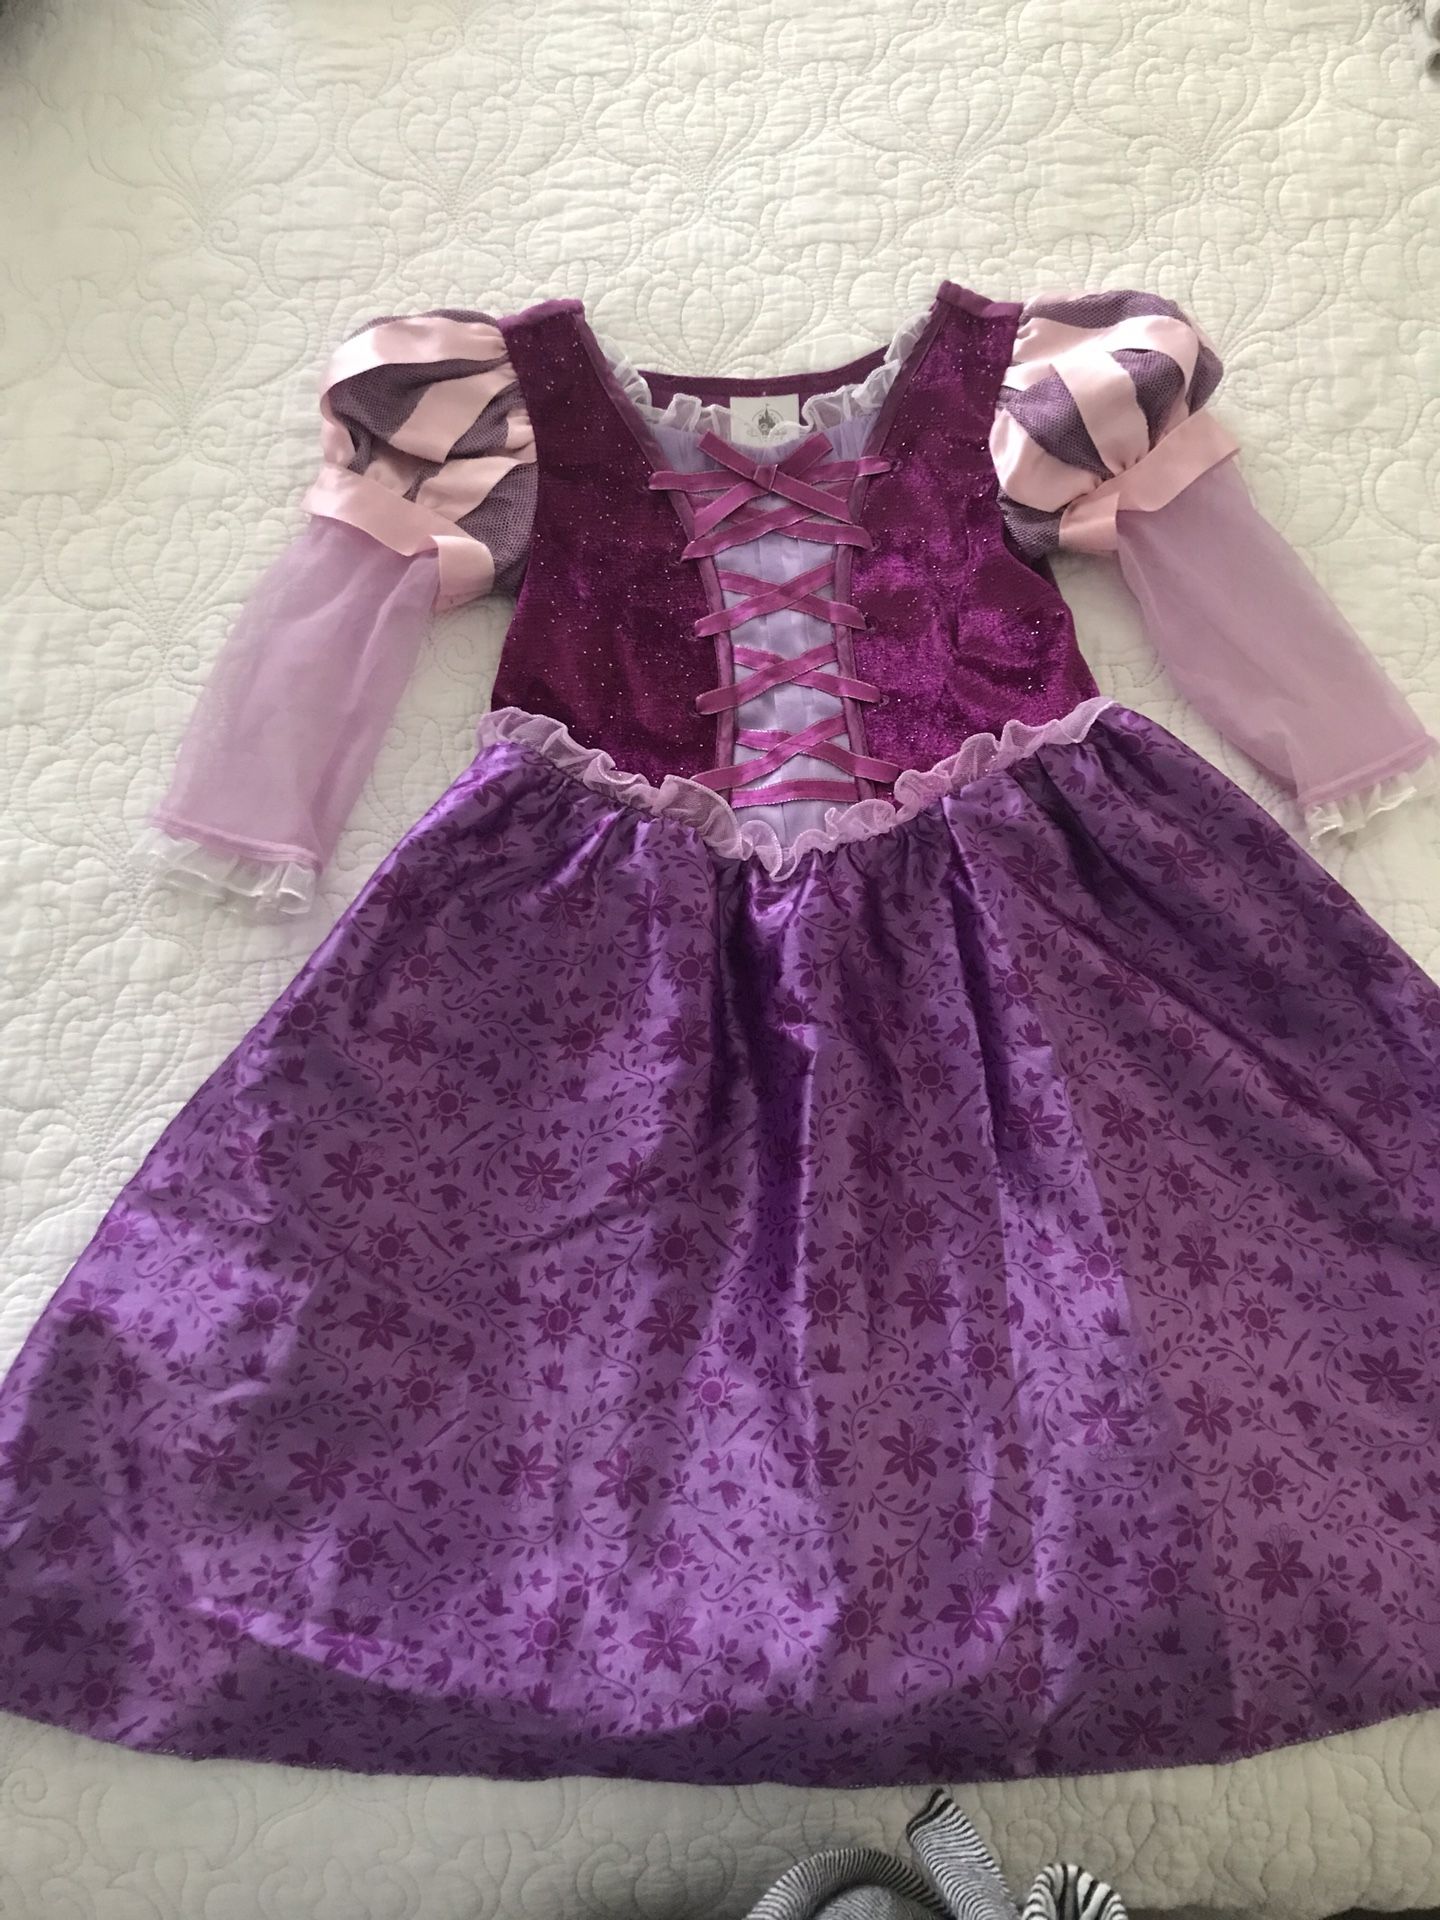 Rapunzel dress 4T